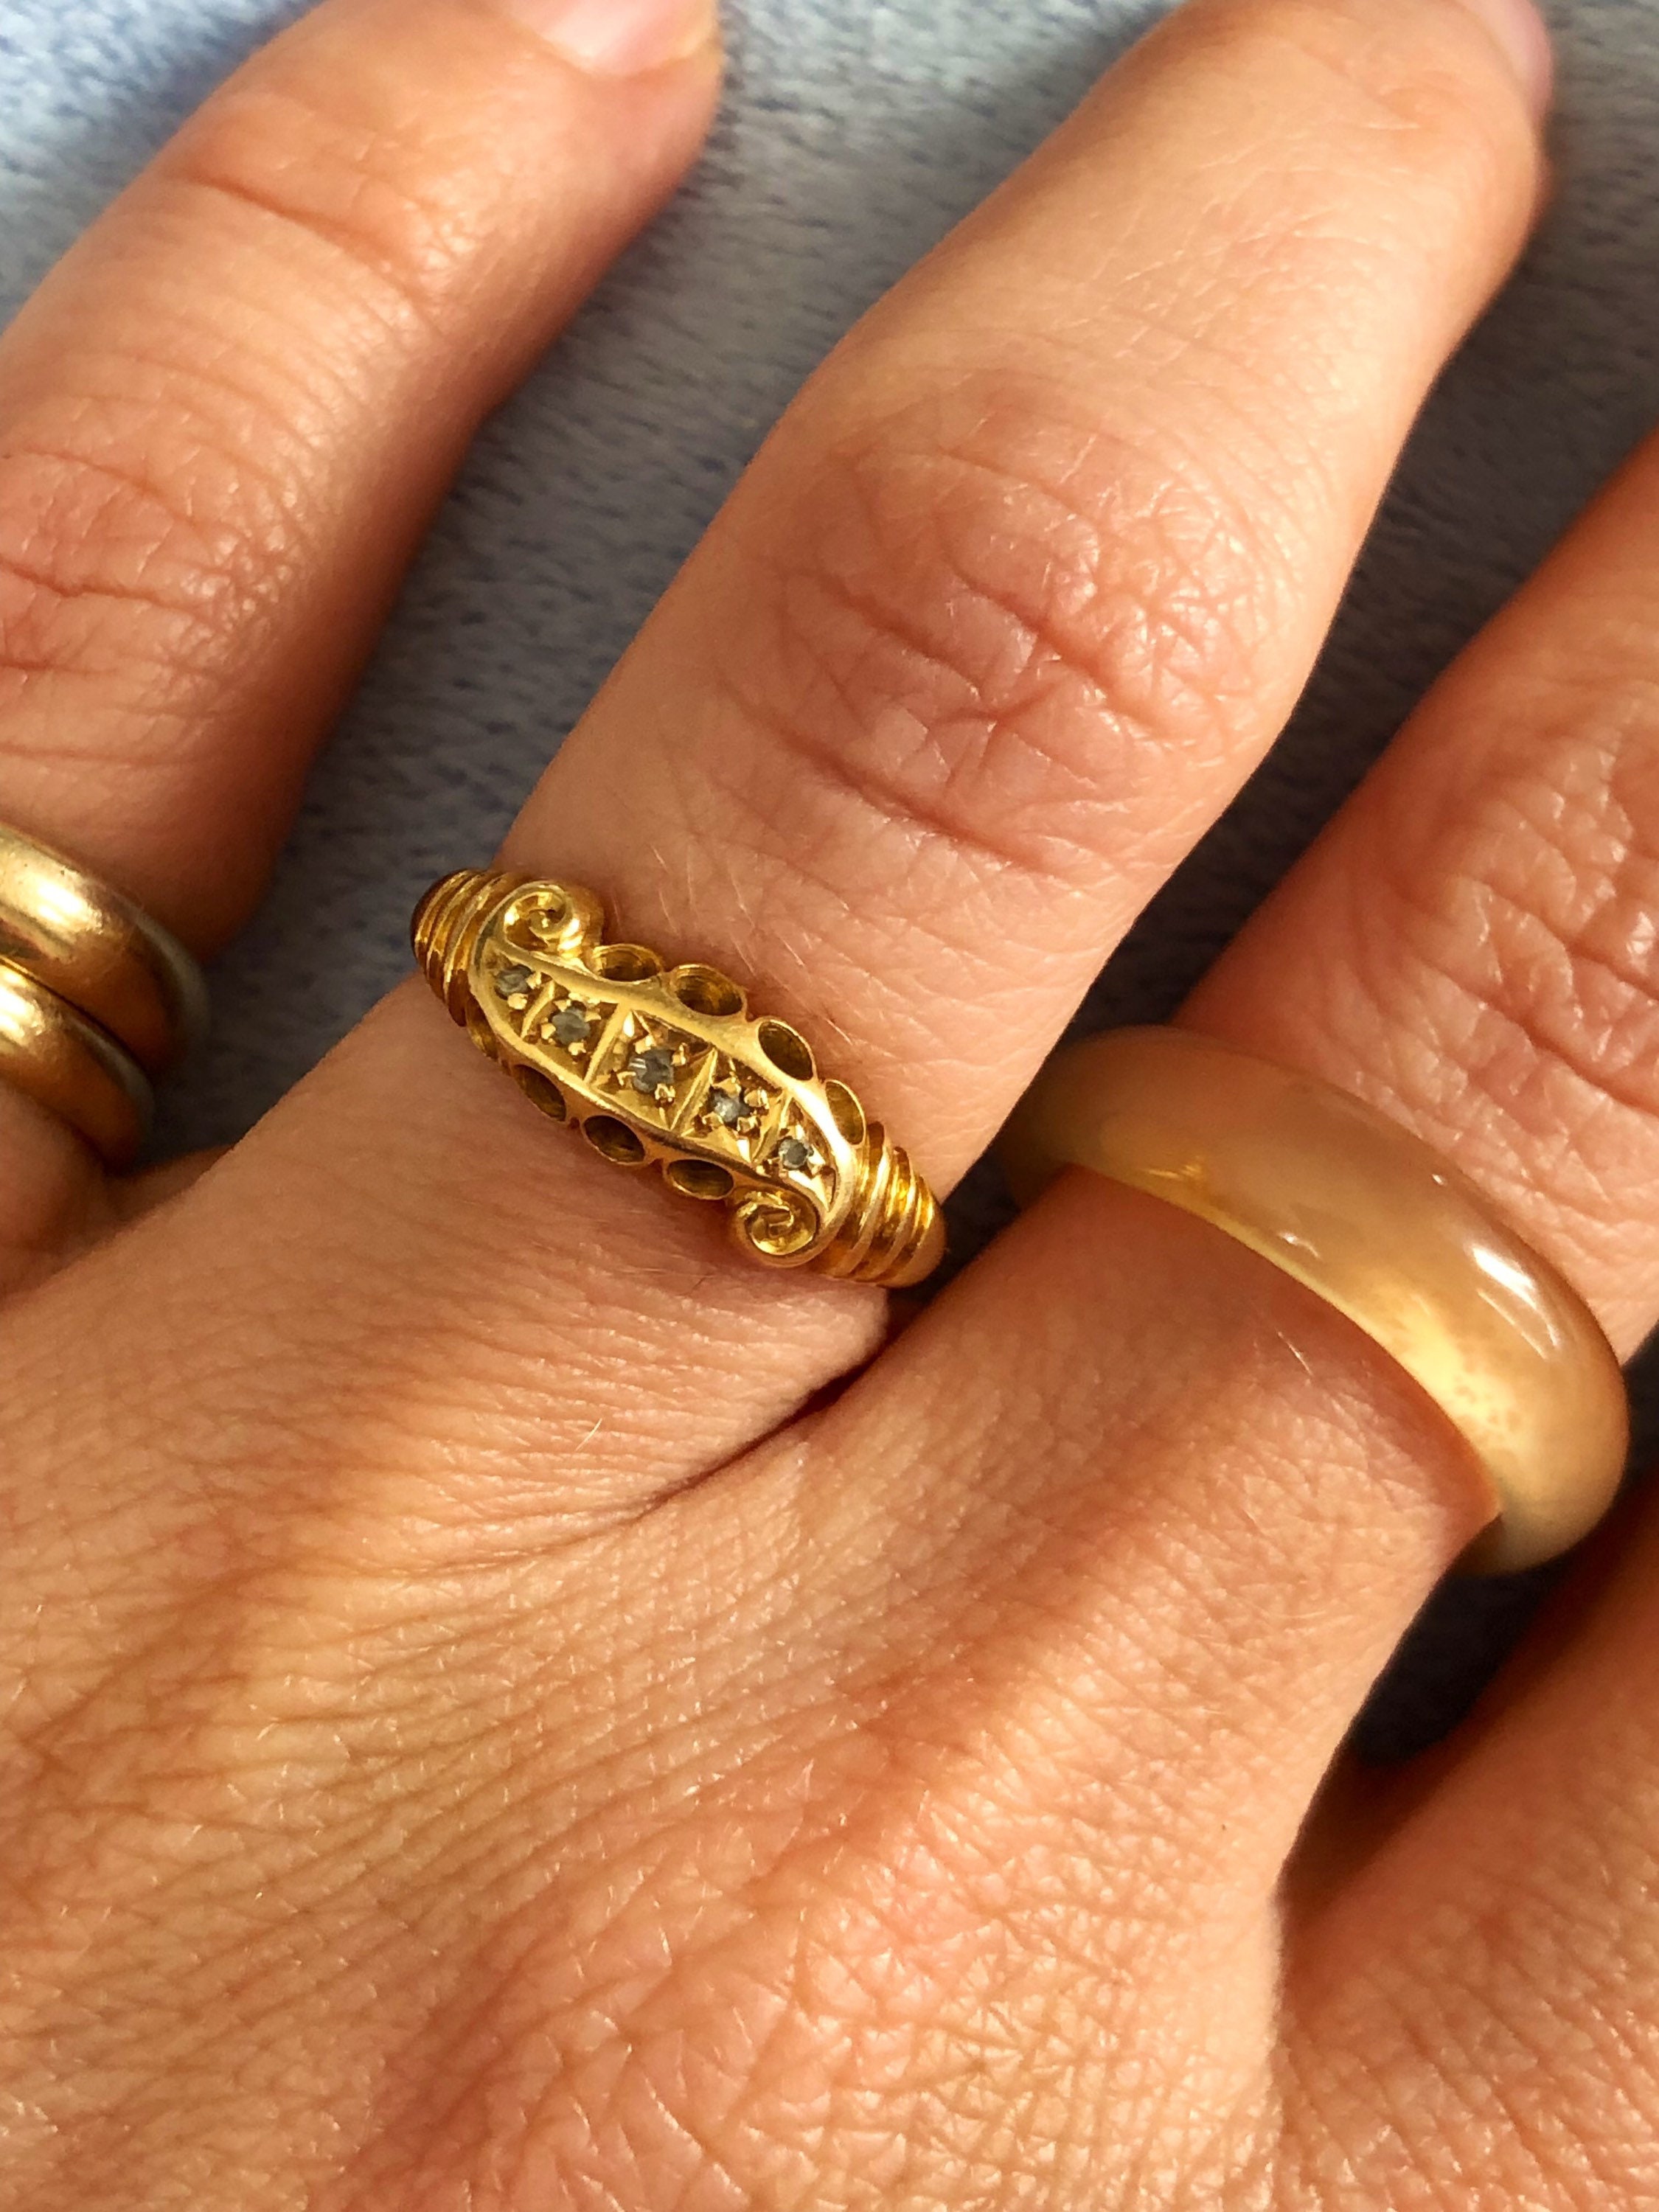 18k Yellow Gold Vintage Style Filigree Engagement Ring #105792